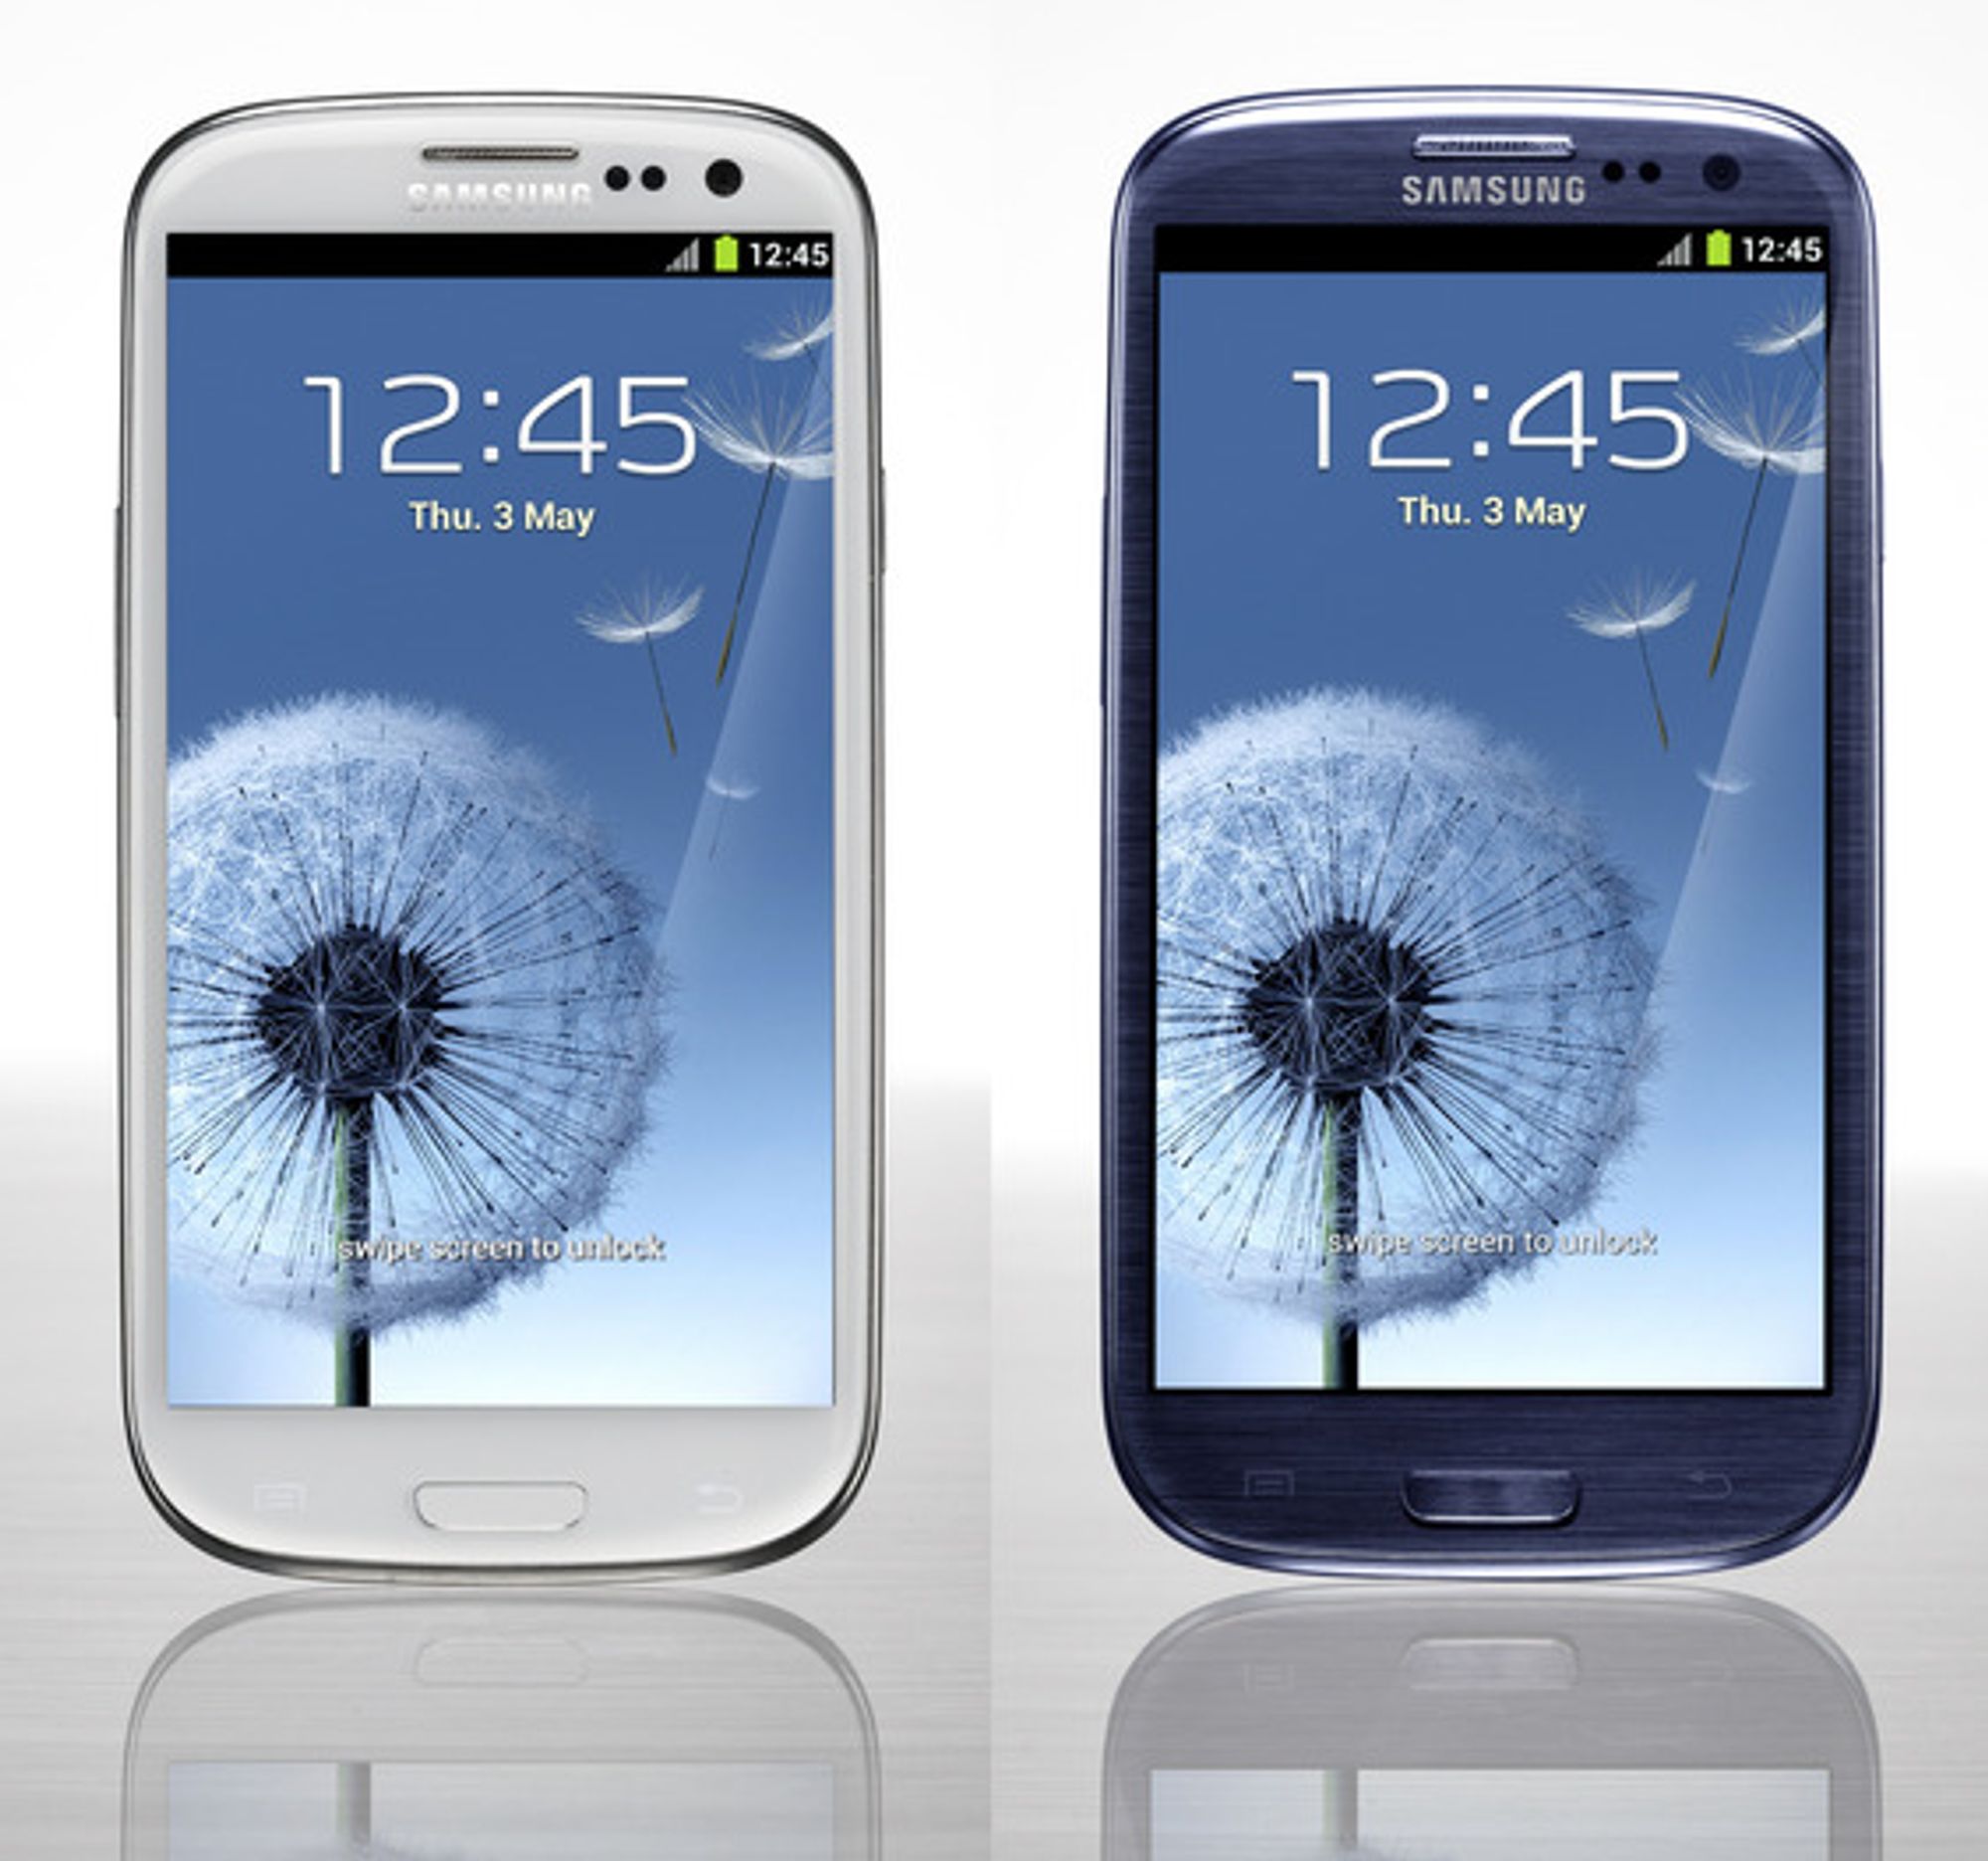  En Samsung Galaxy S3 er ikke en Samsung Galaxy S3, opplyser Strand Consult. 